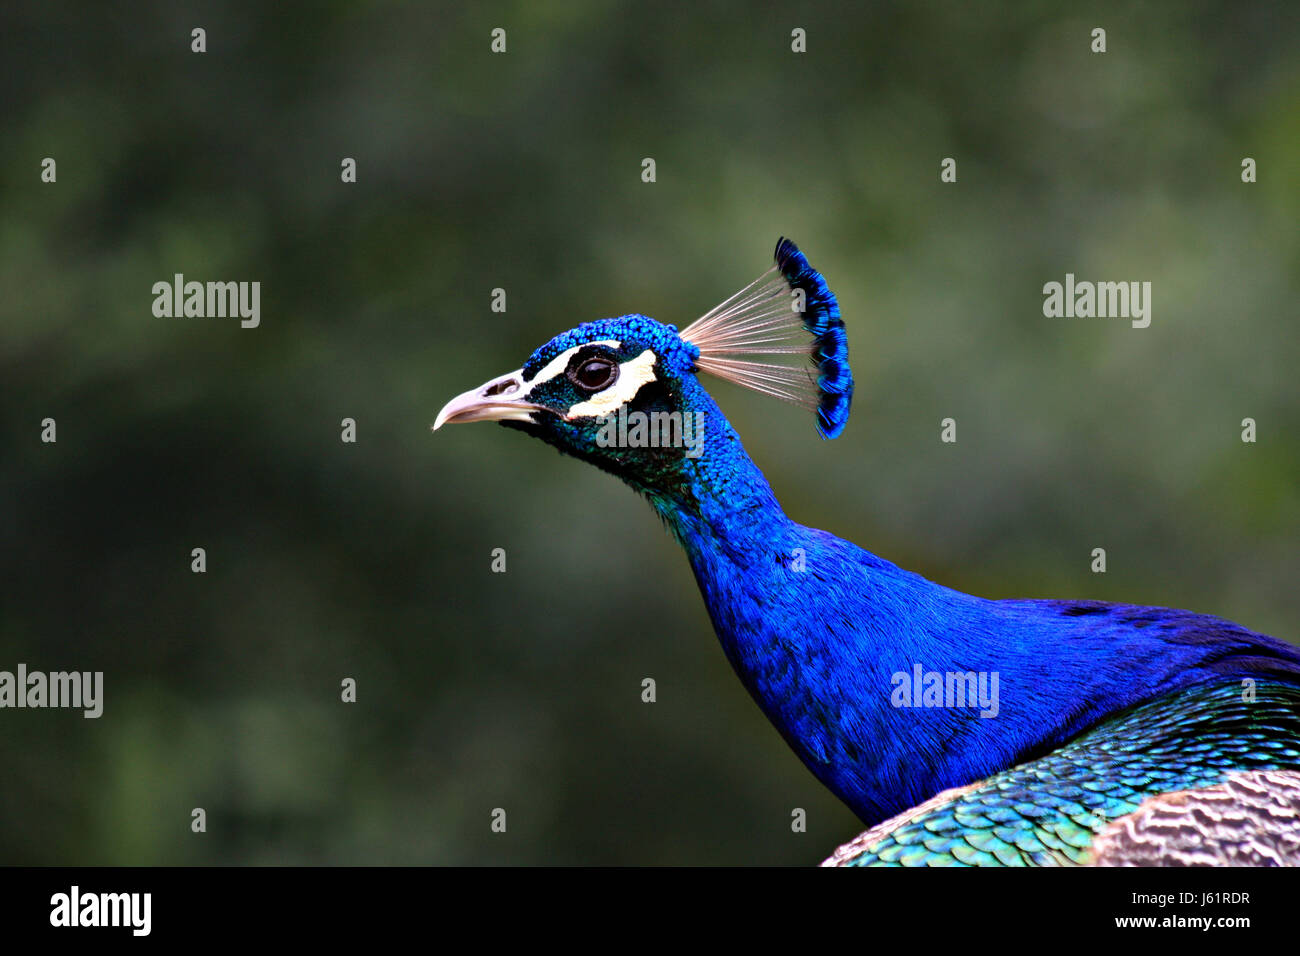 blue bird portrait birds coloured crown peacock braggarts proud pride blue bird Stock Photo